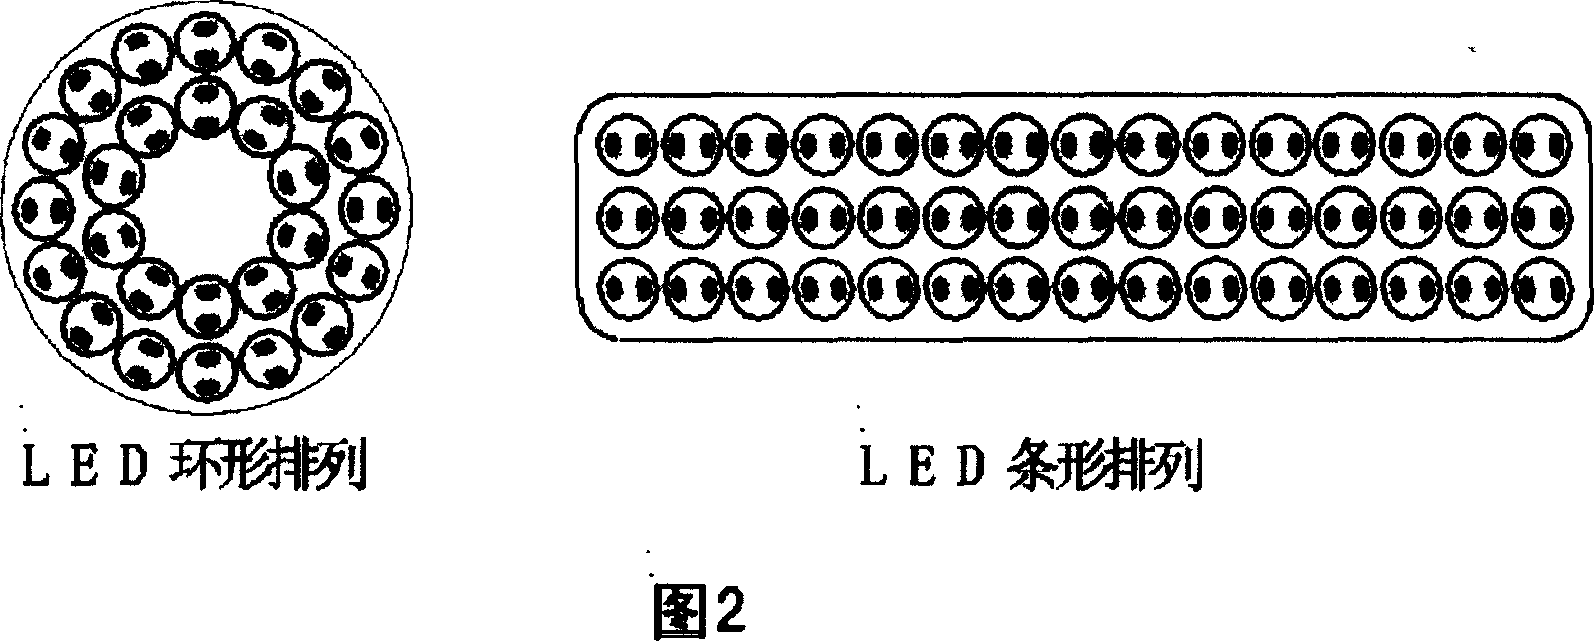 LED illuminating light and its controlling circuit